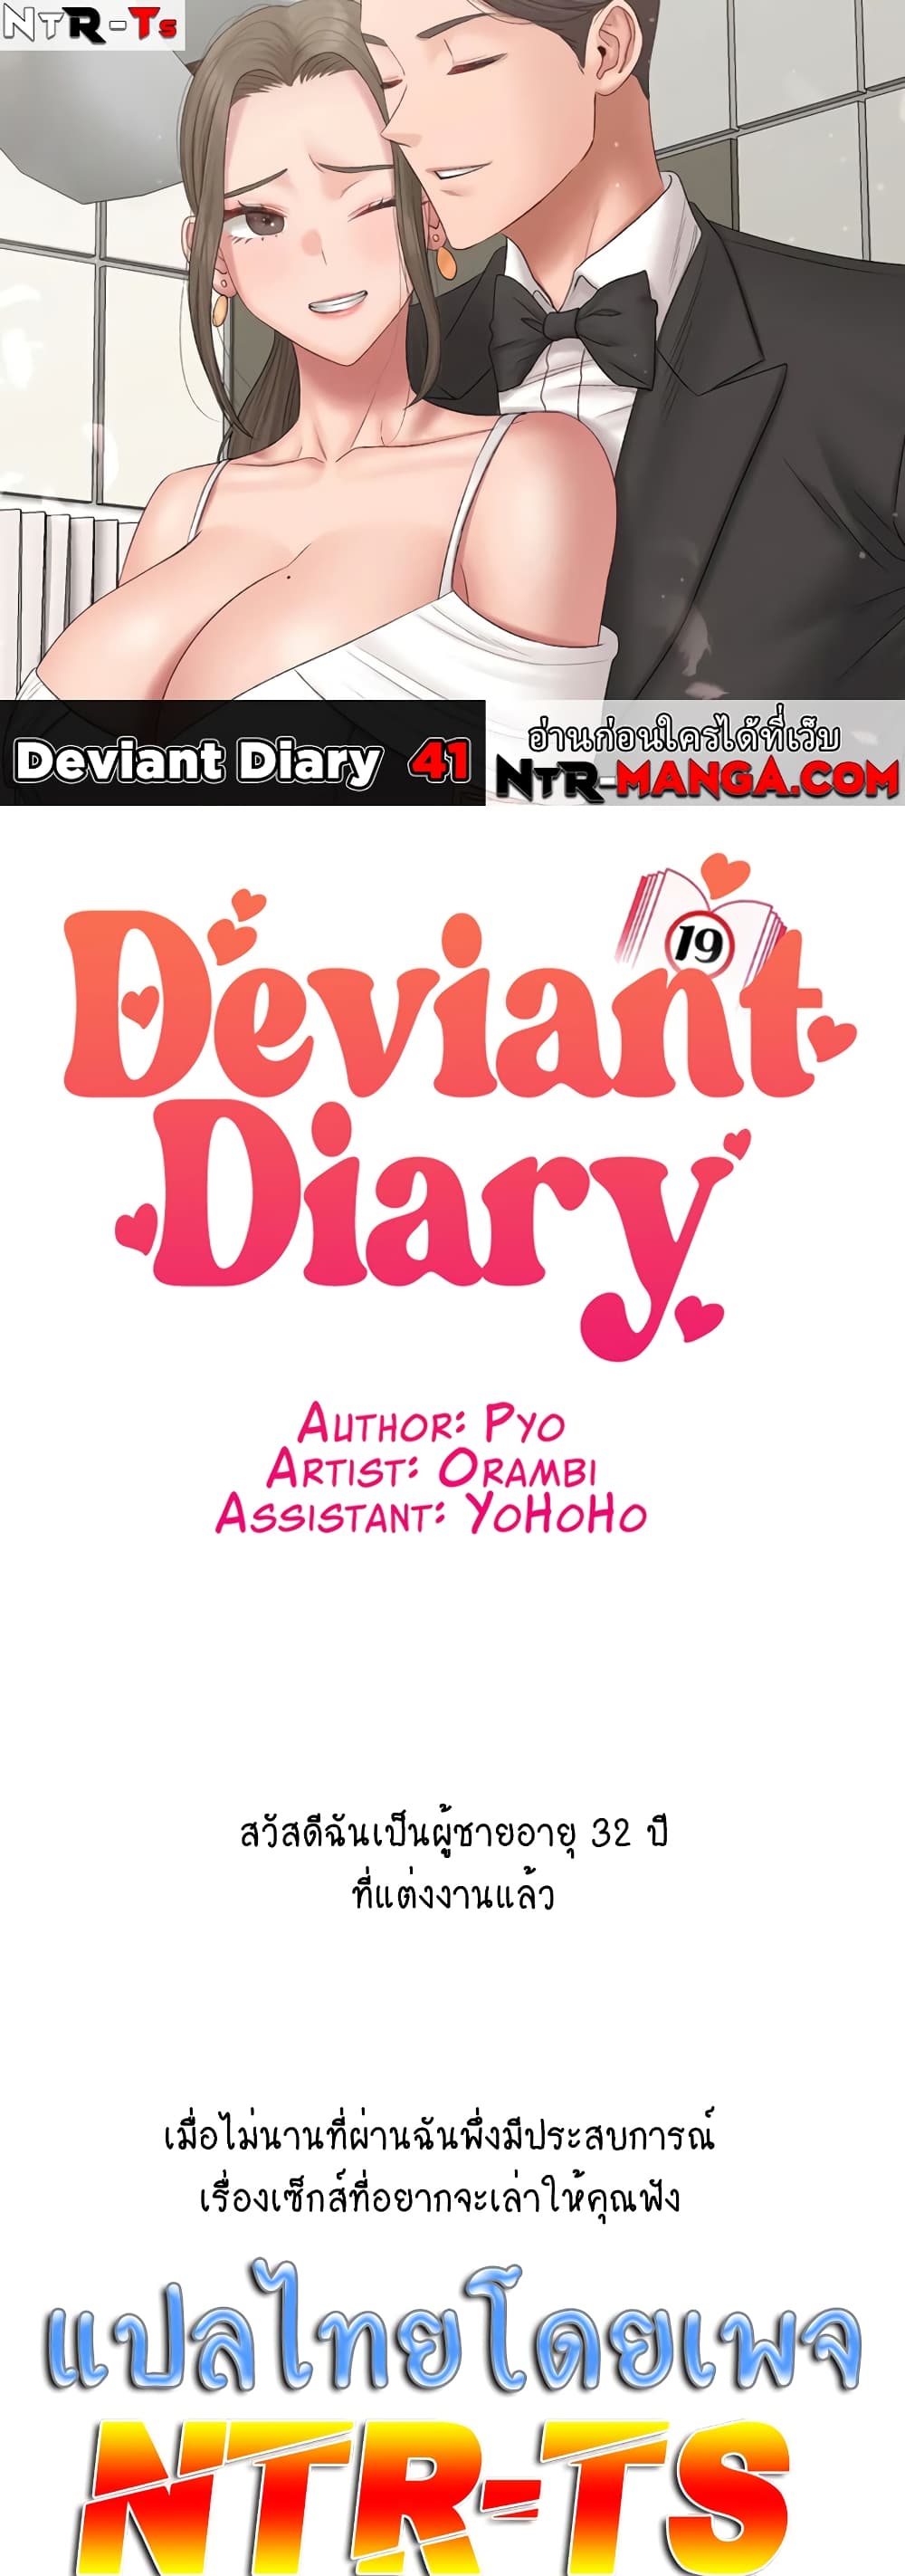 Deviant Diary 41 (1)